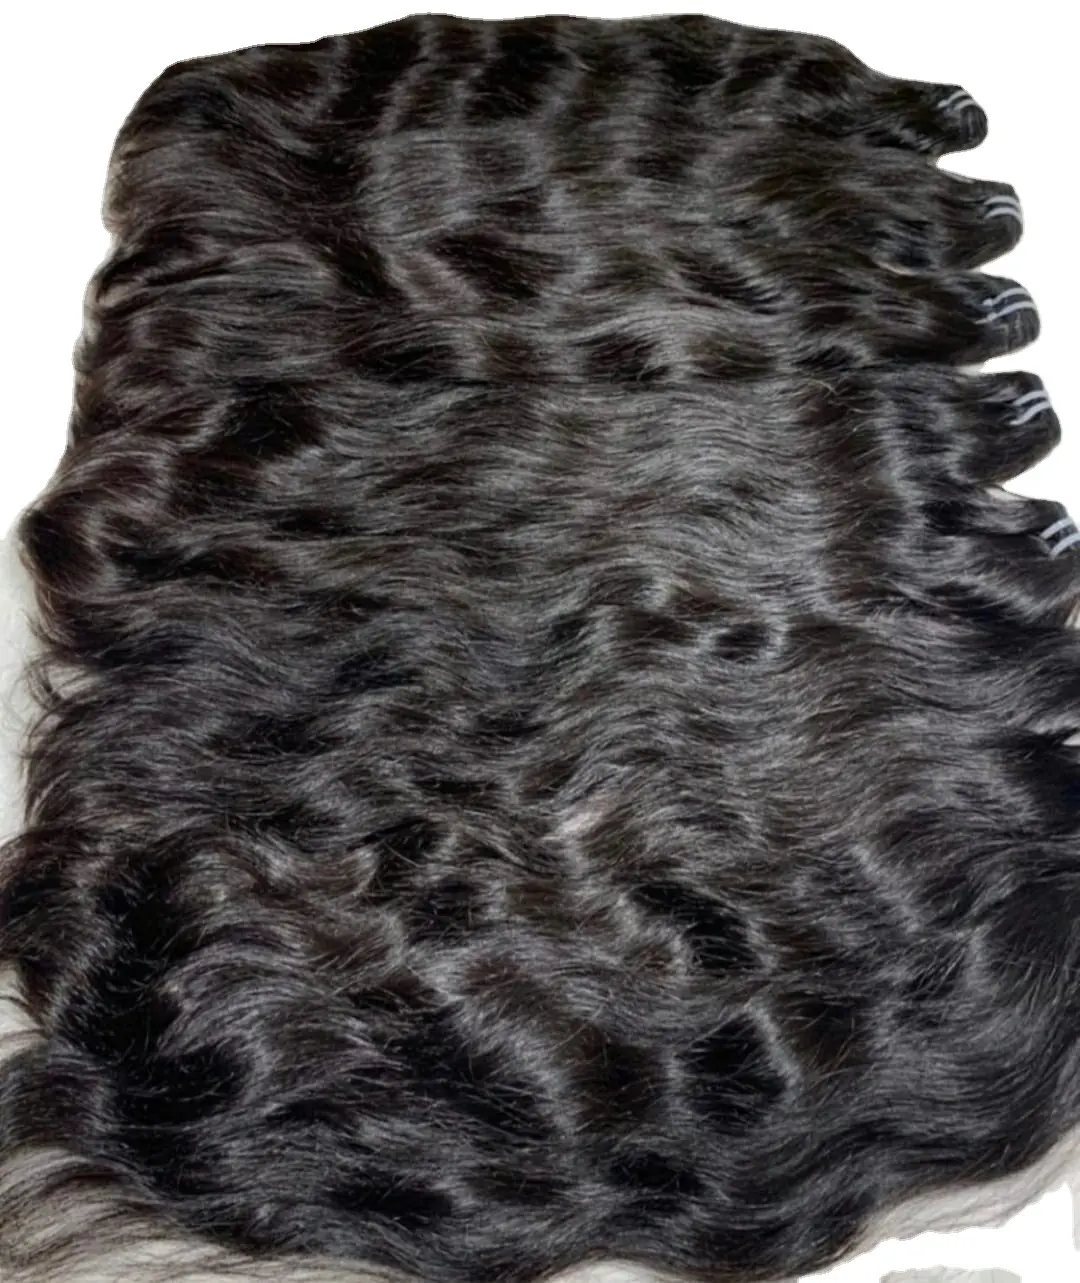 Mechones de pelo humano 100% indio, cabello humano ondulado de 24 pulgadas